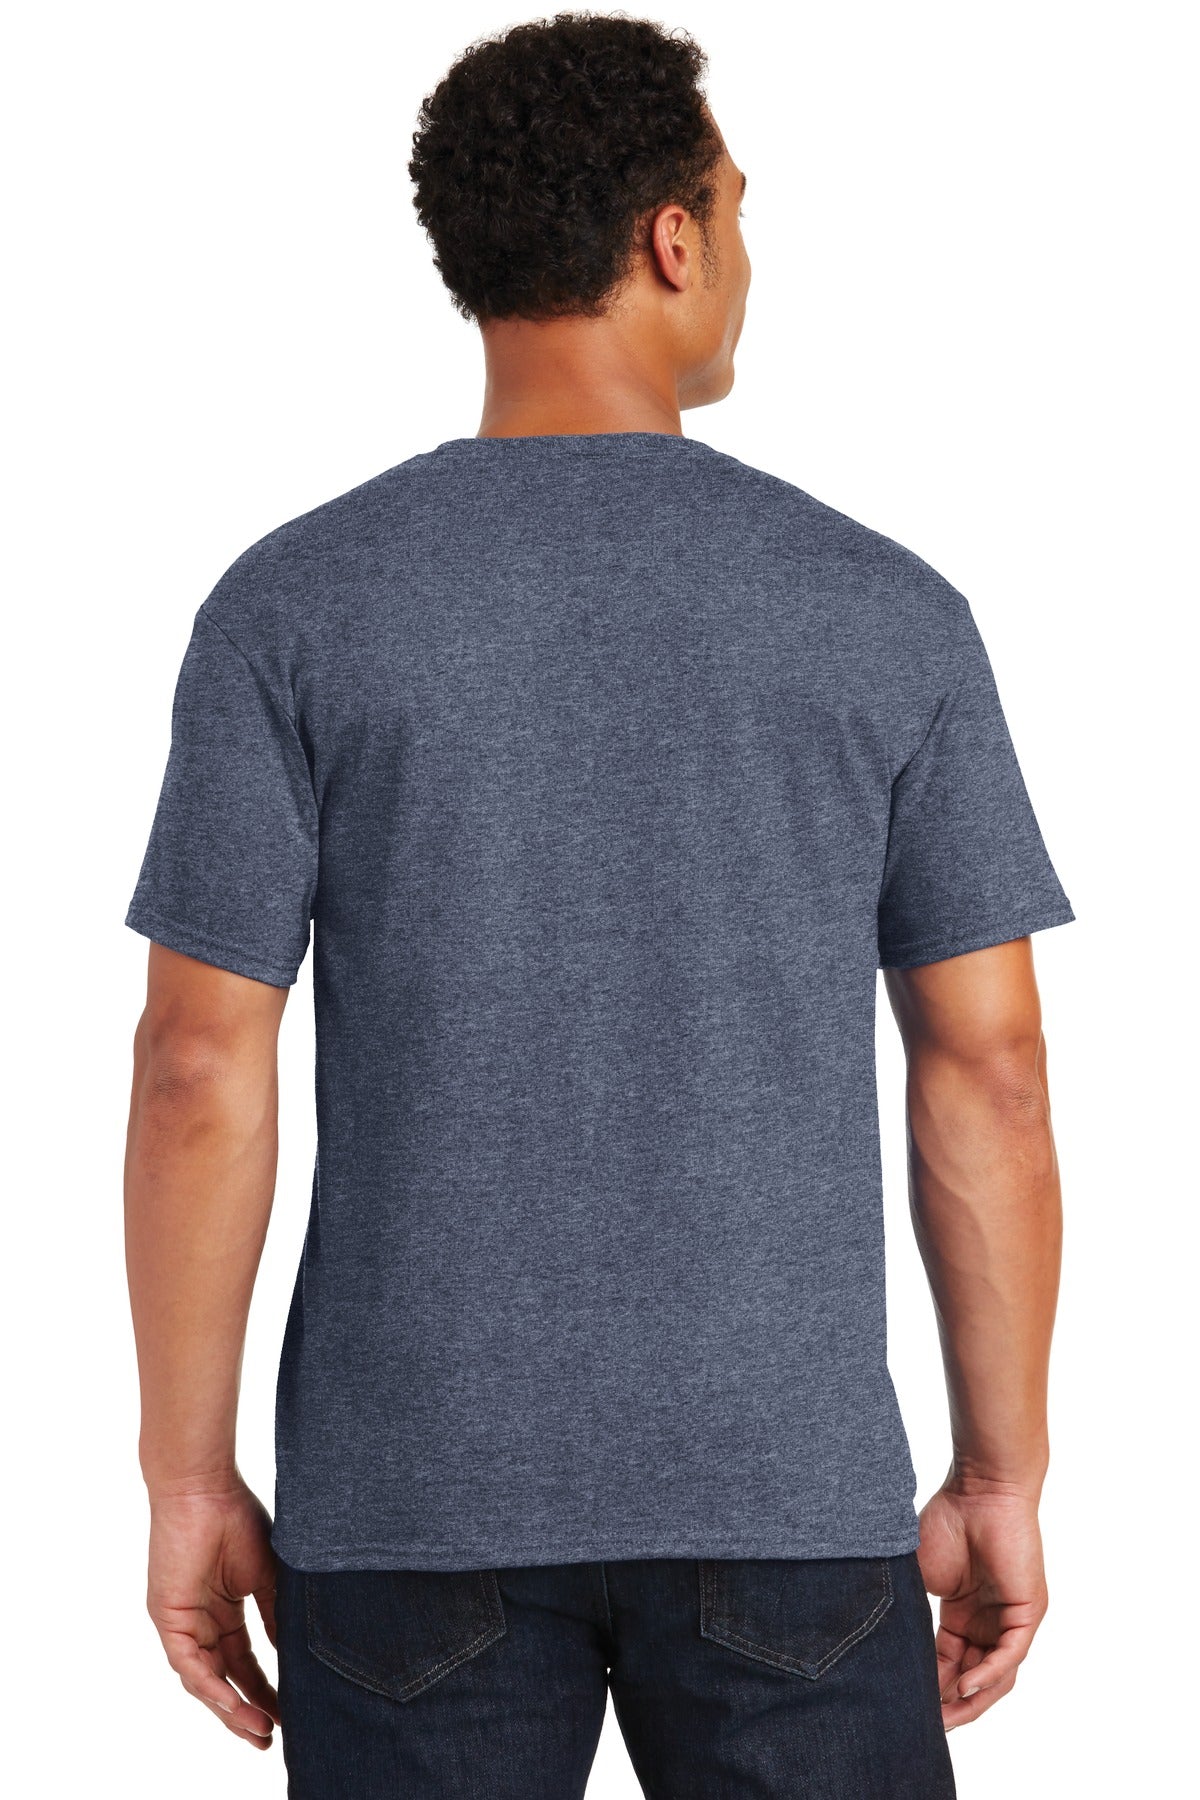 JERZEES® - Dri-Power® 50/50 Cotton/Poly T-Shirt. 29M [Vintage Heather Navy] - DFW Impression